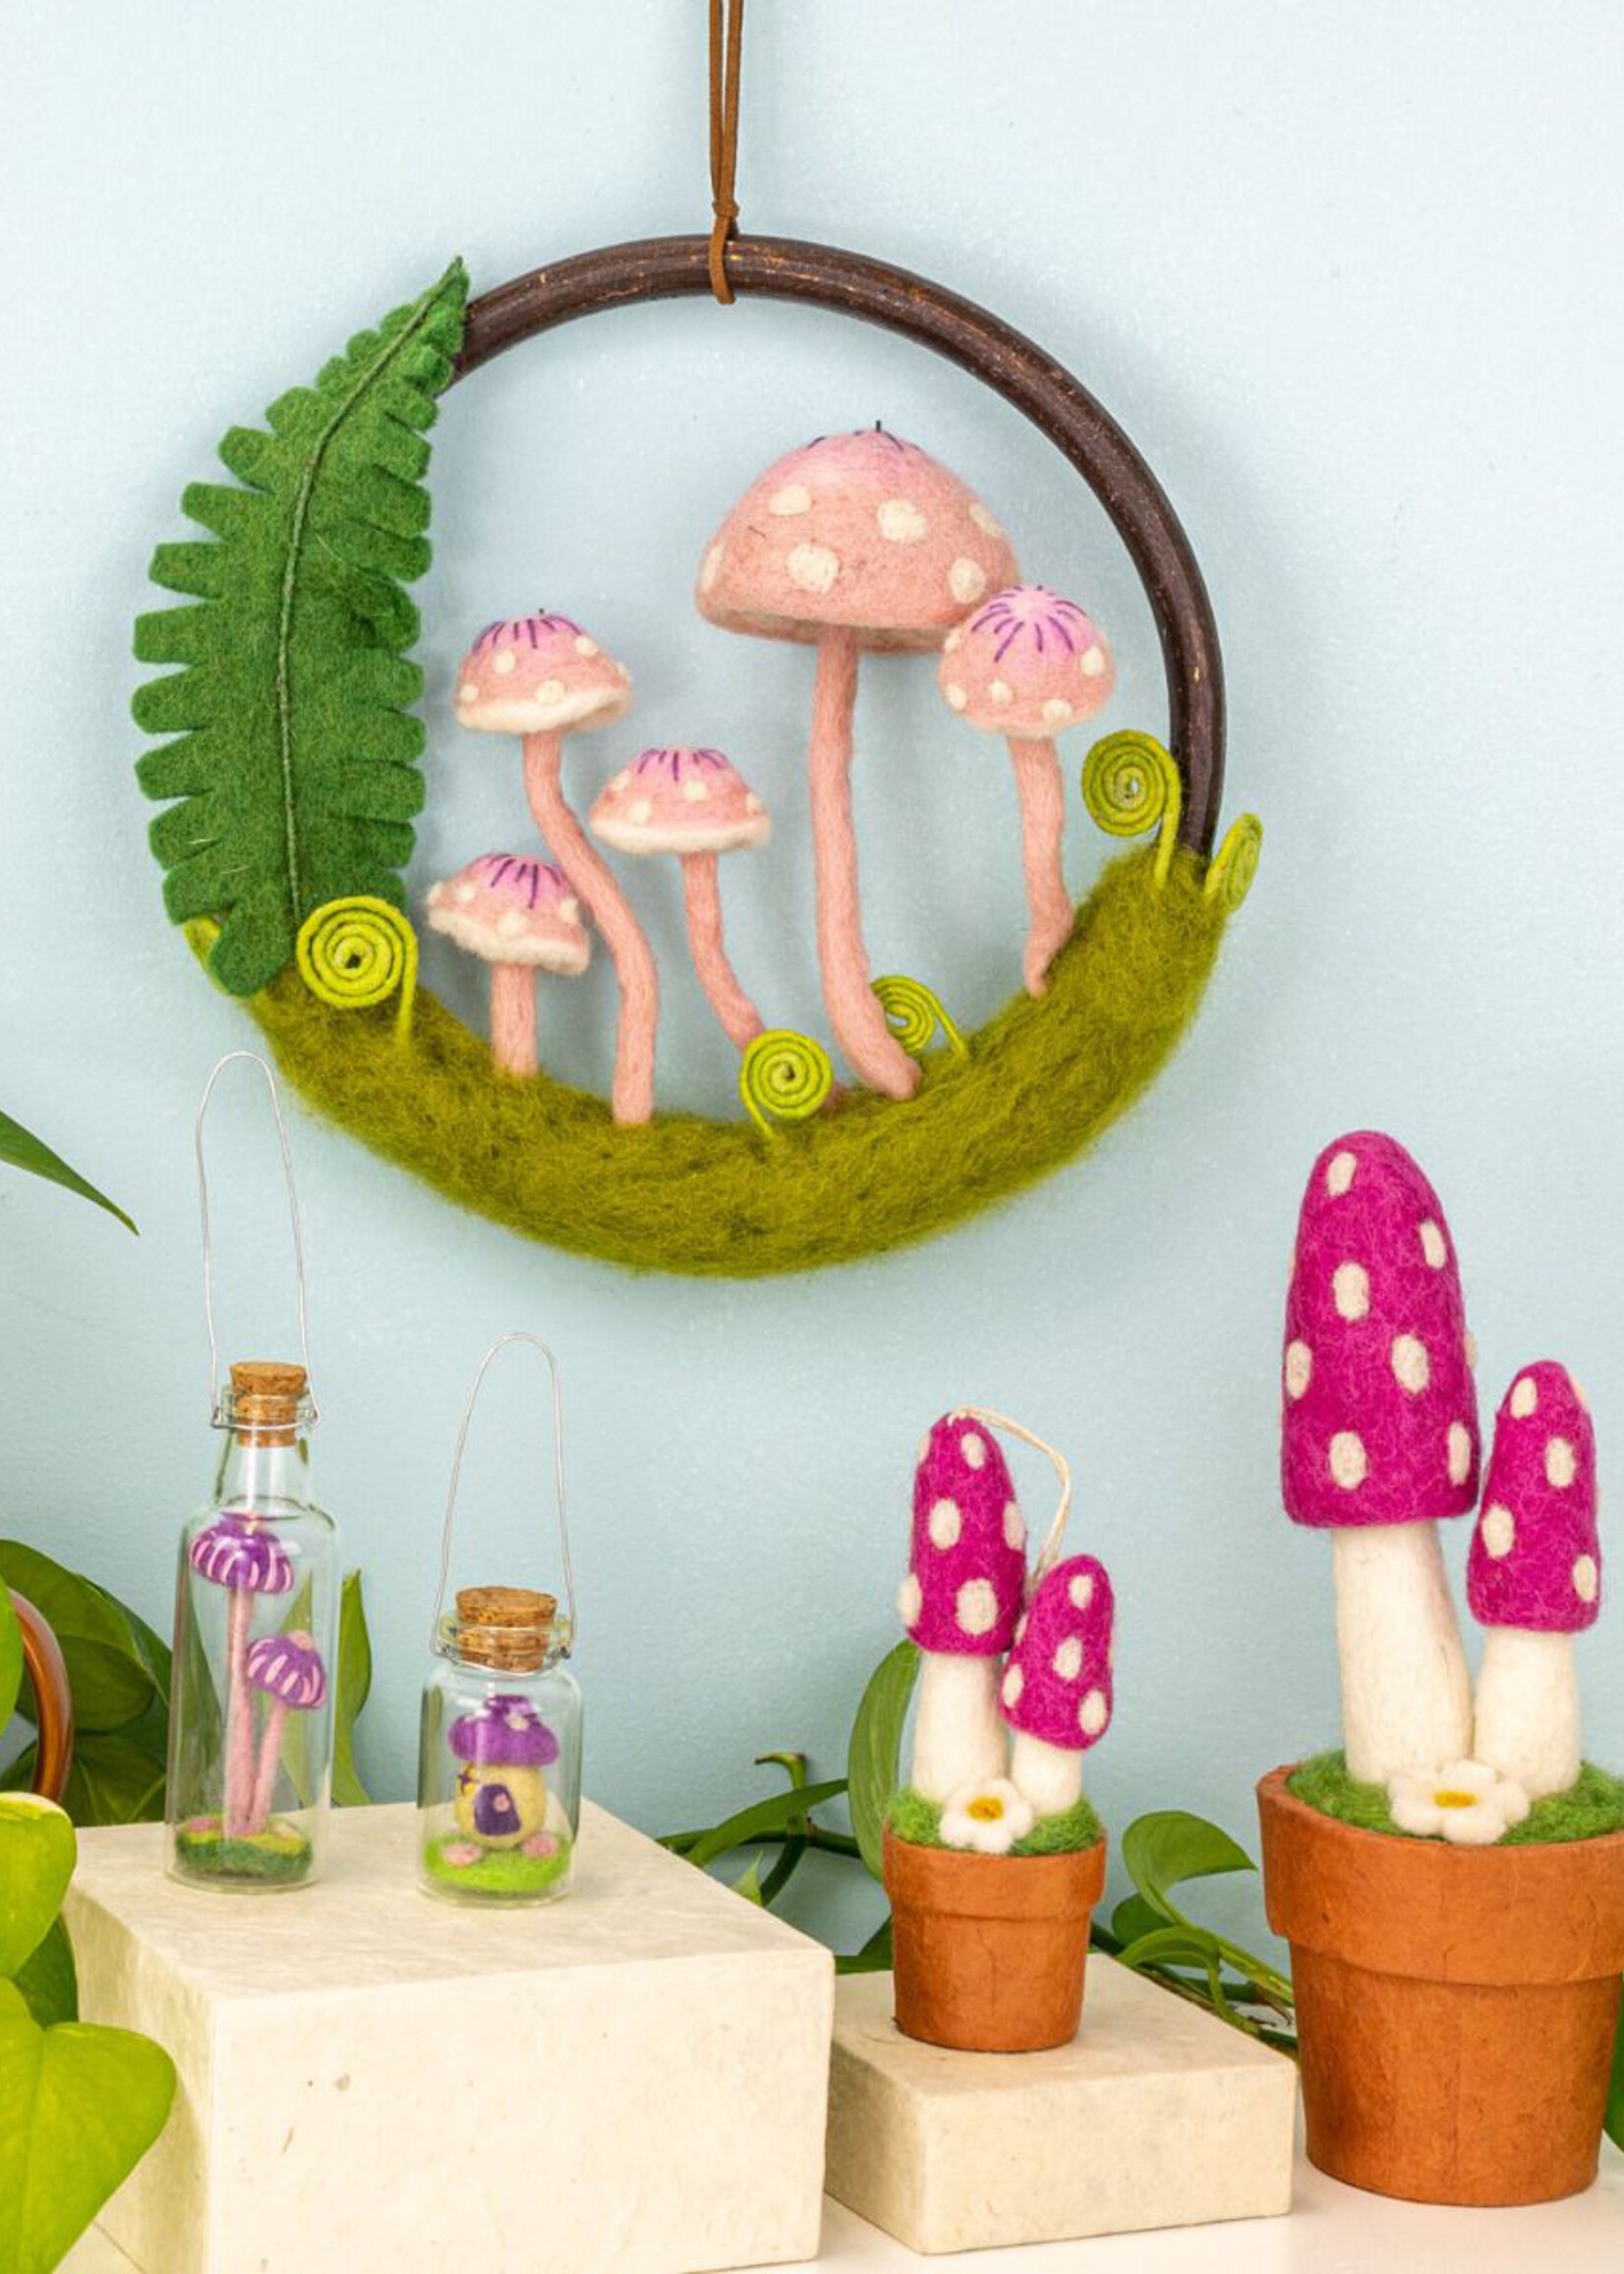 dZi Pink Pixie Mushroom Potted Plant